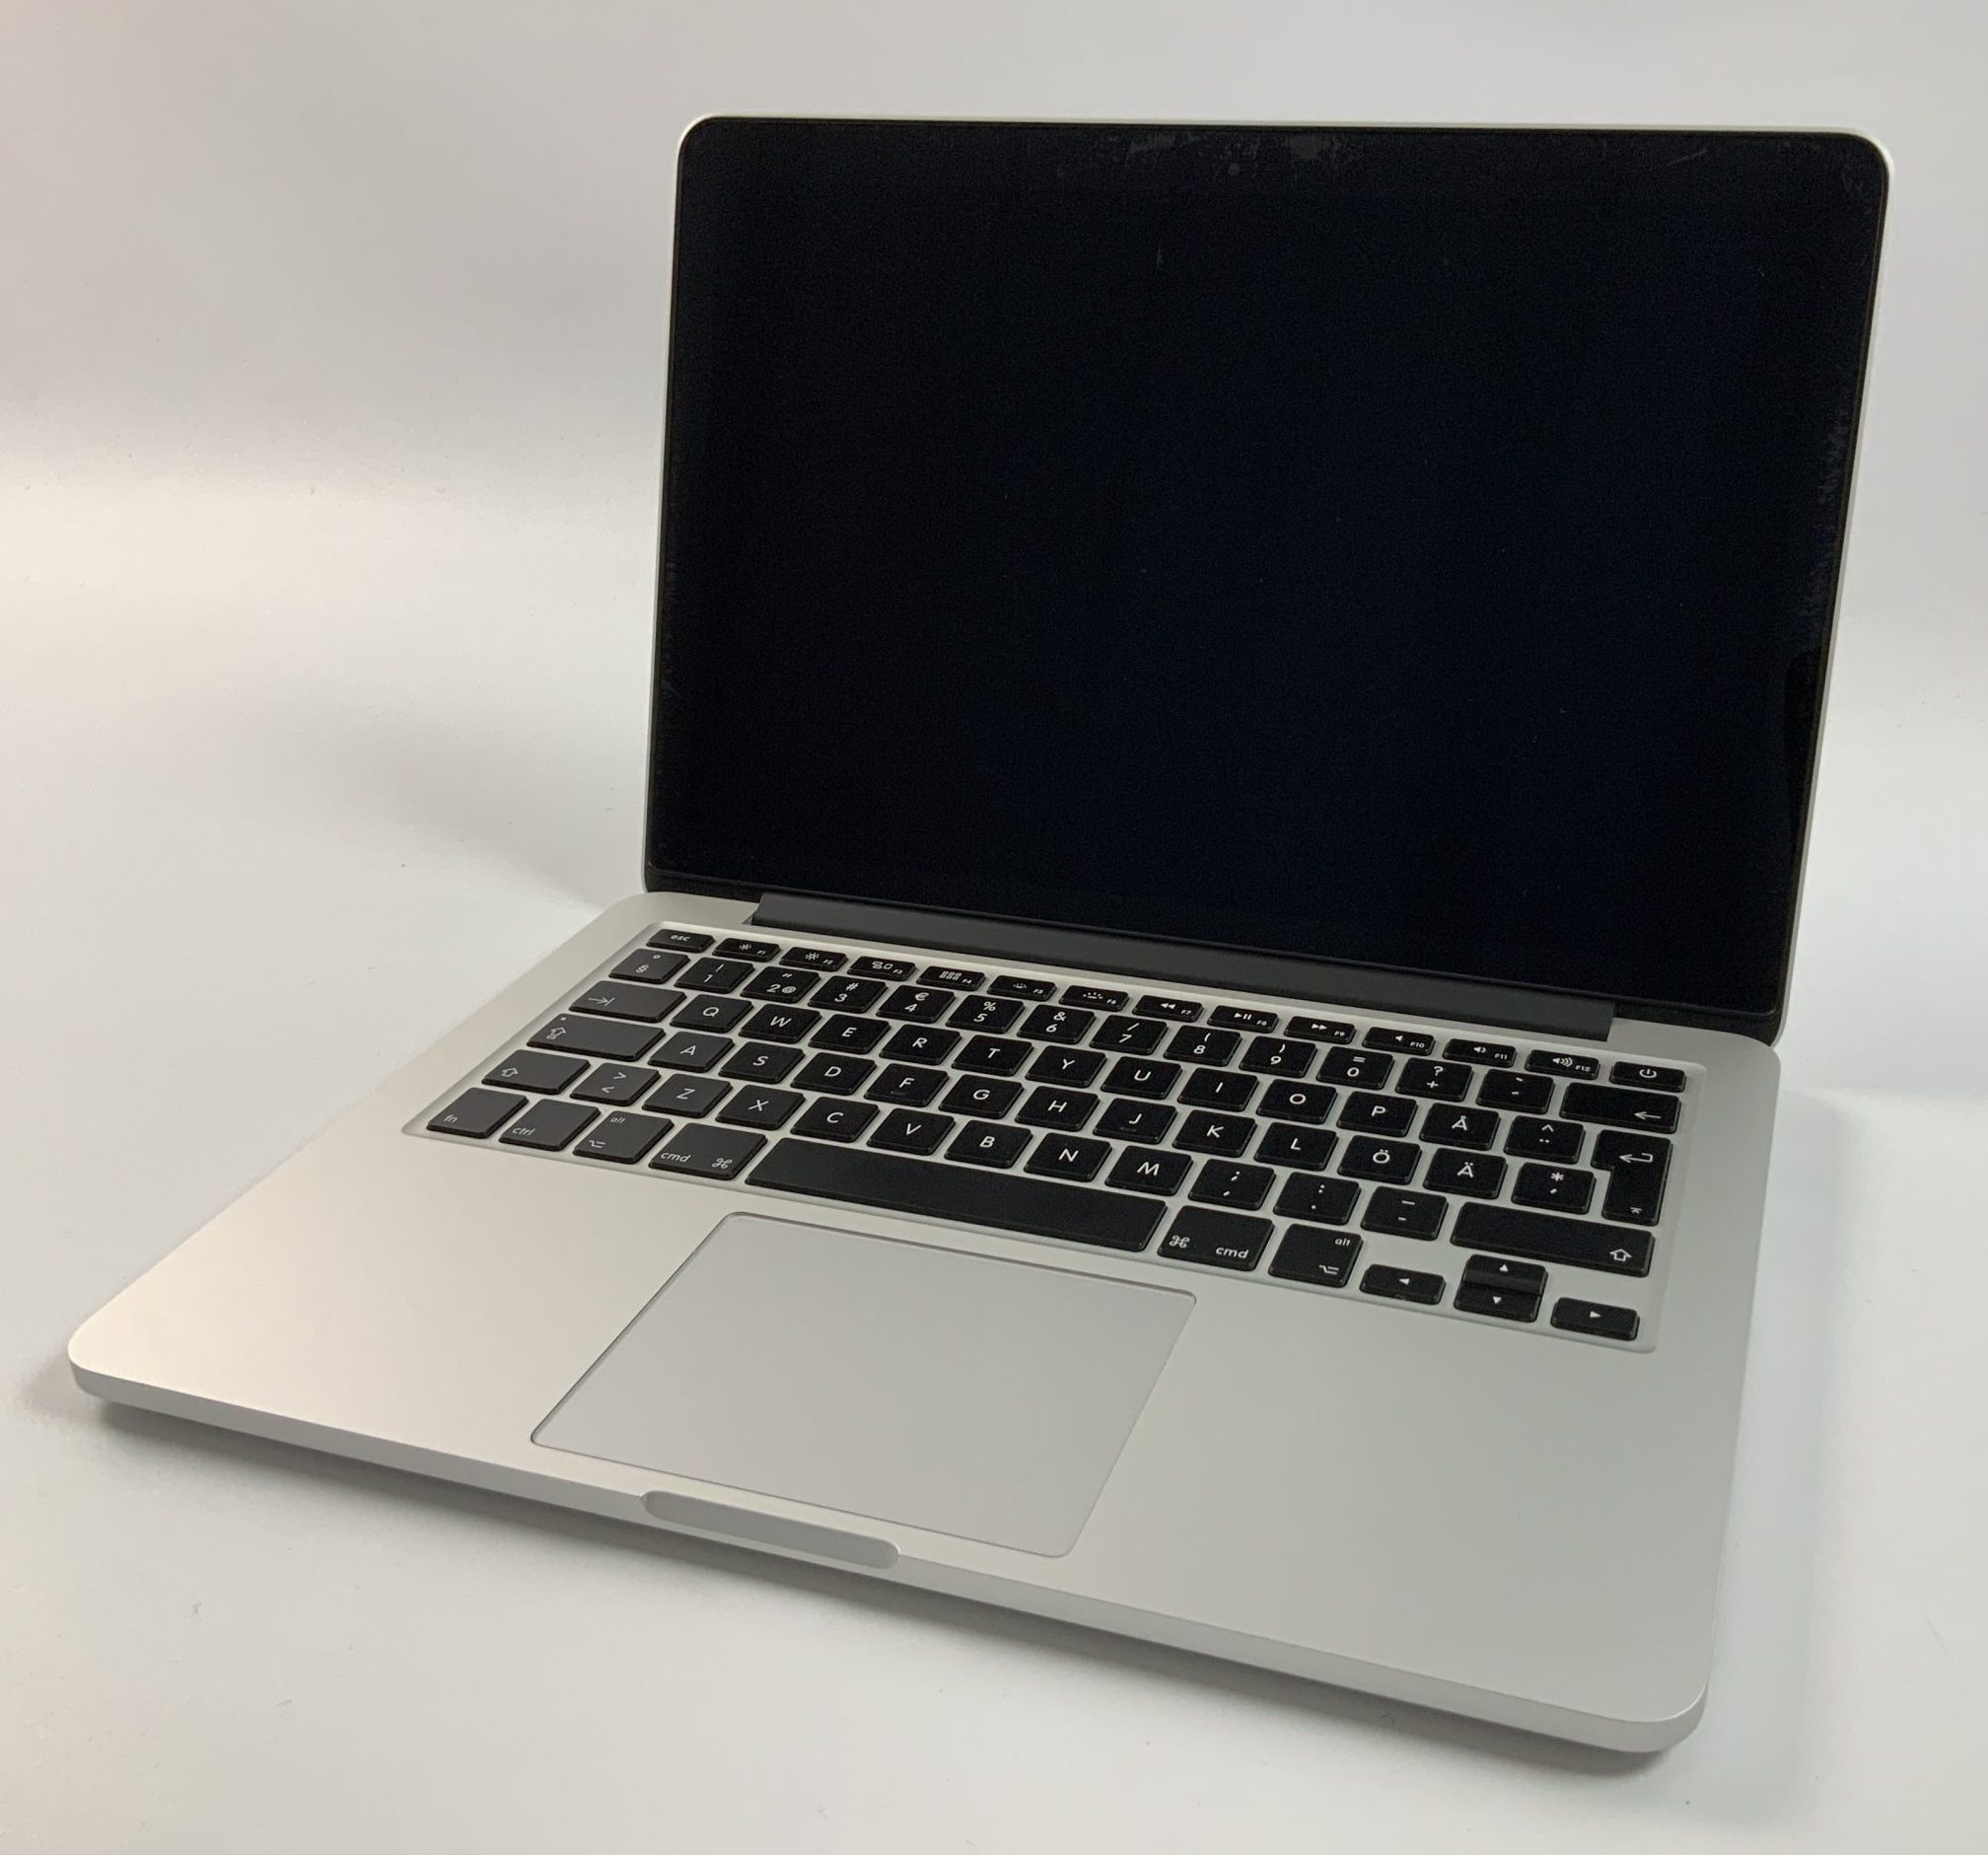 MacBook Pro Retina 13" Early 2015 (Intel Core i5 2.7 GHz 8 GB RAM 256 GB SSD), Intel Core i5 2.7 GHz, 8 GB RAM, 256 GB SSD, bild 1